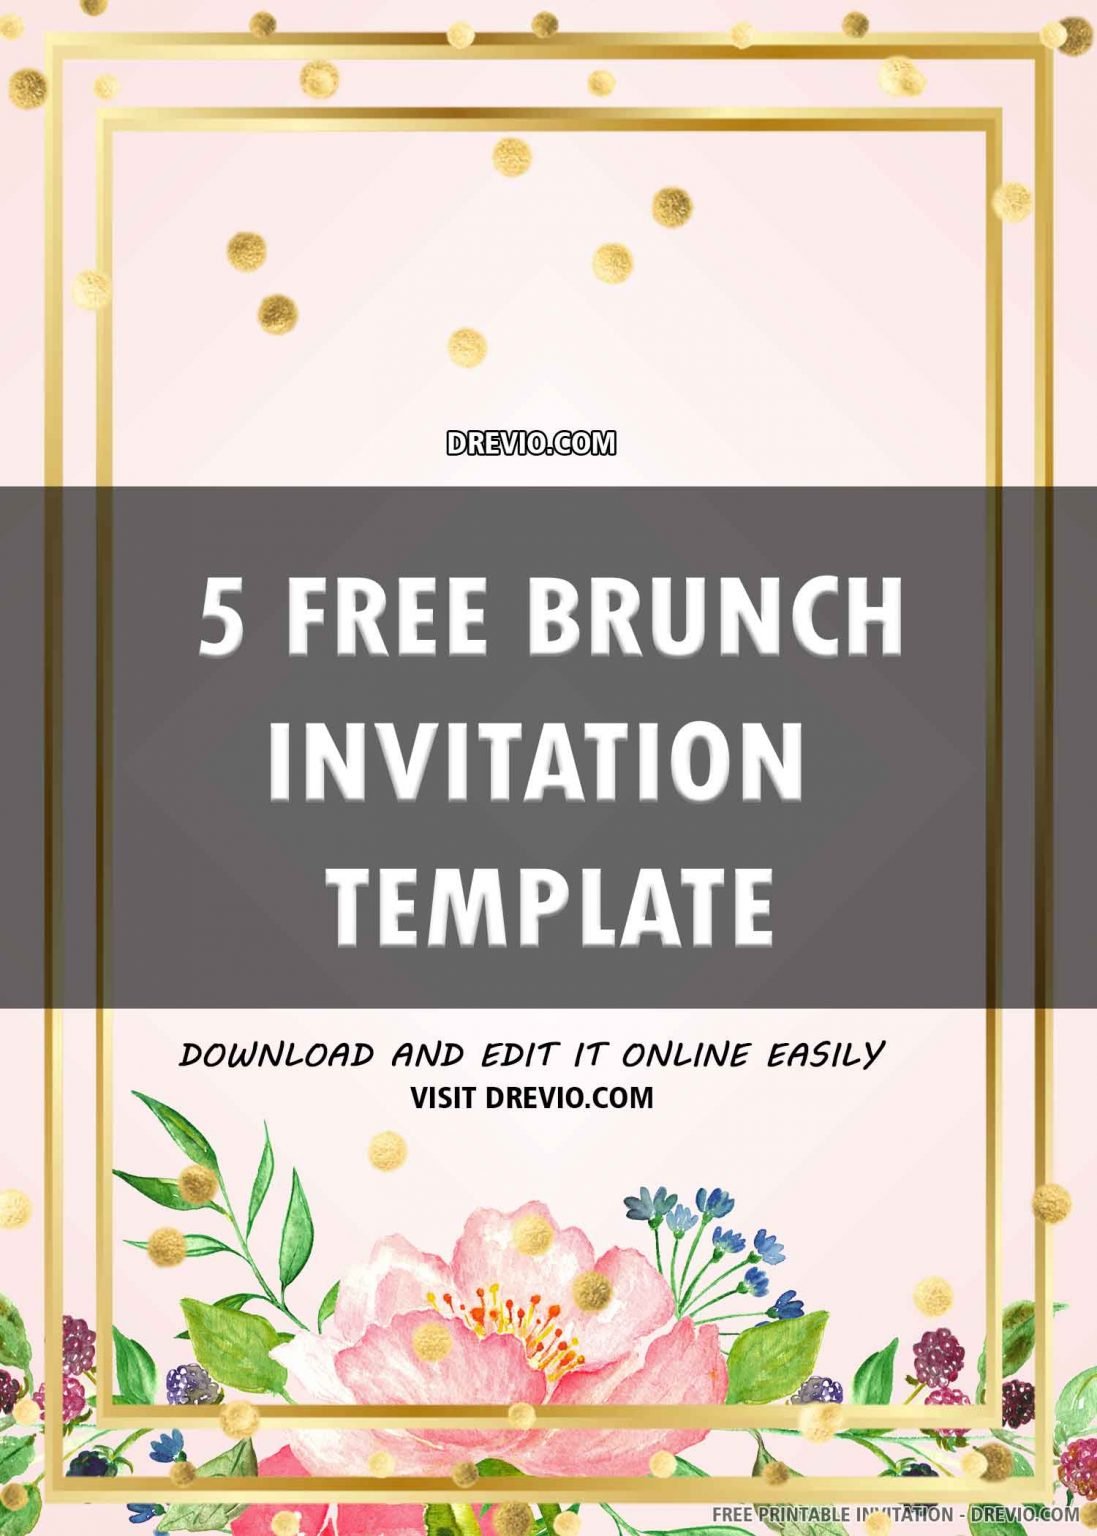 (FREE PRINTABLE) Brunch Invitation Template Download Hundreds FREE